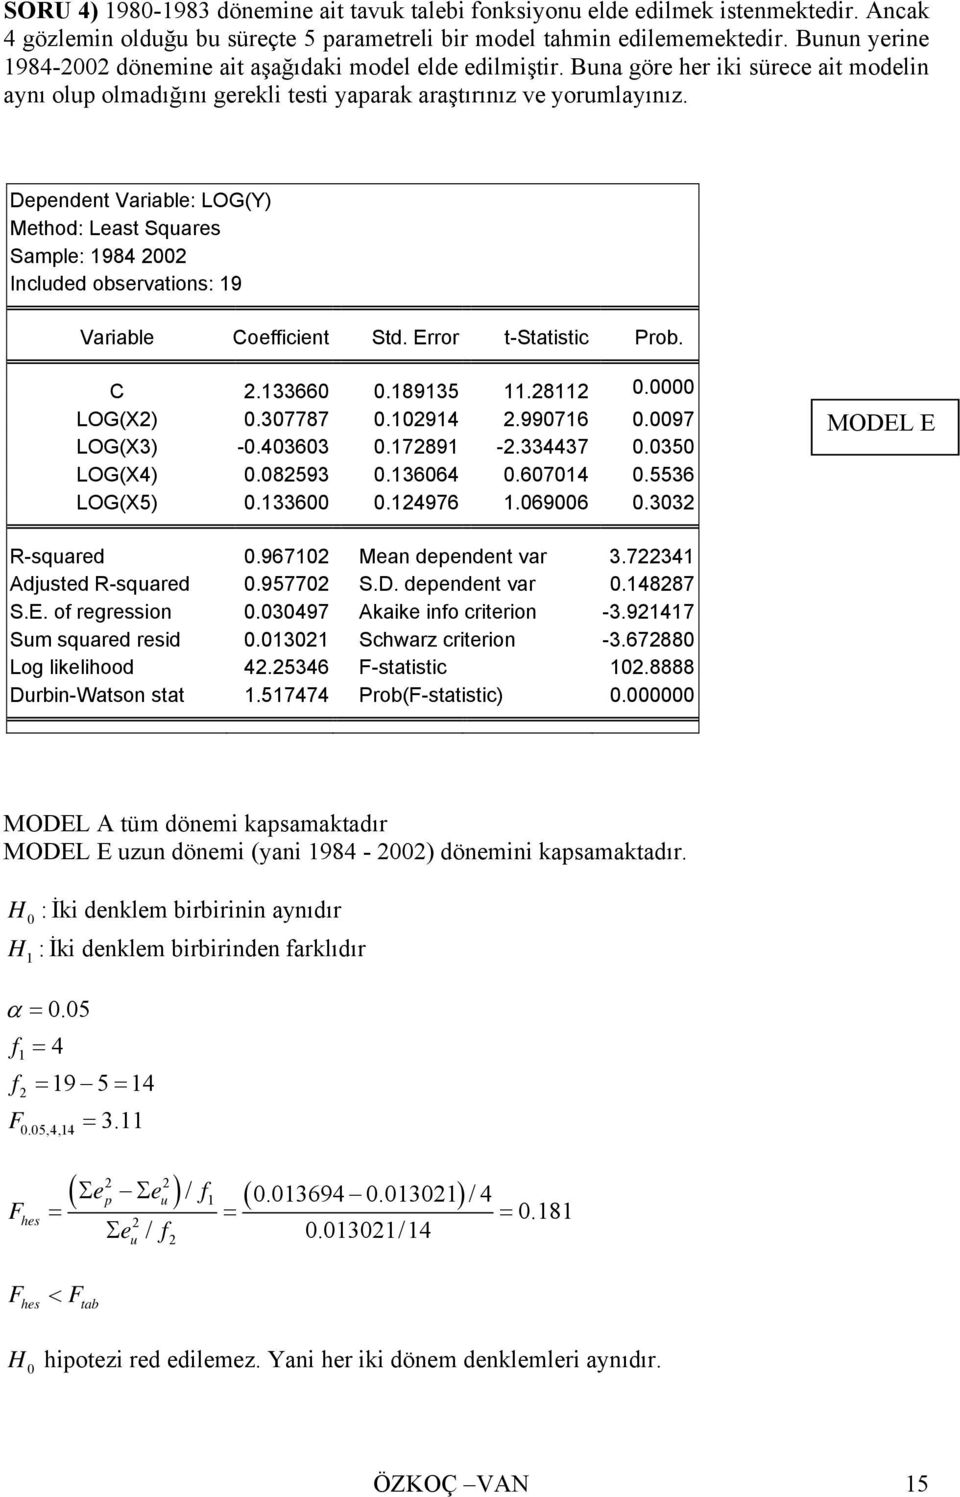 Dependent Variable: LOG(Y) Method: Least Squares Sample: 1984 2002 Included observations: 19 Variable Coefficient Std. Error t-statistic Prob. C 2.133660 0.189135 11.28112 0.0000 LOG(X2) 0.307787 0.